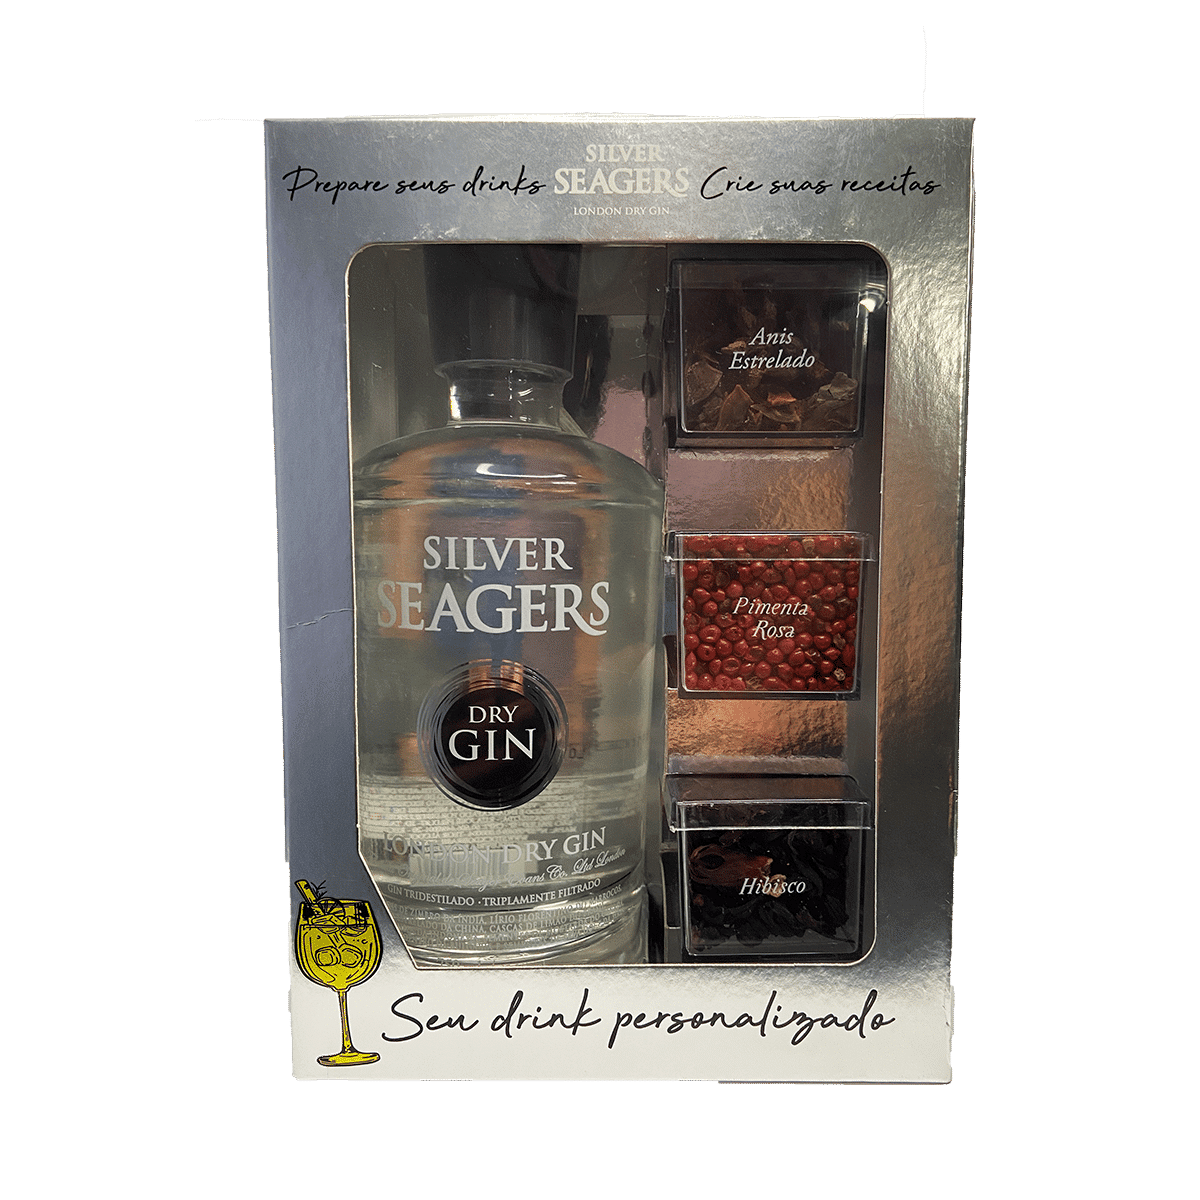 Kit Gin Seagers com especiarias - Adega Brooklin